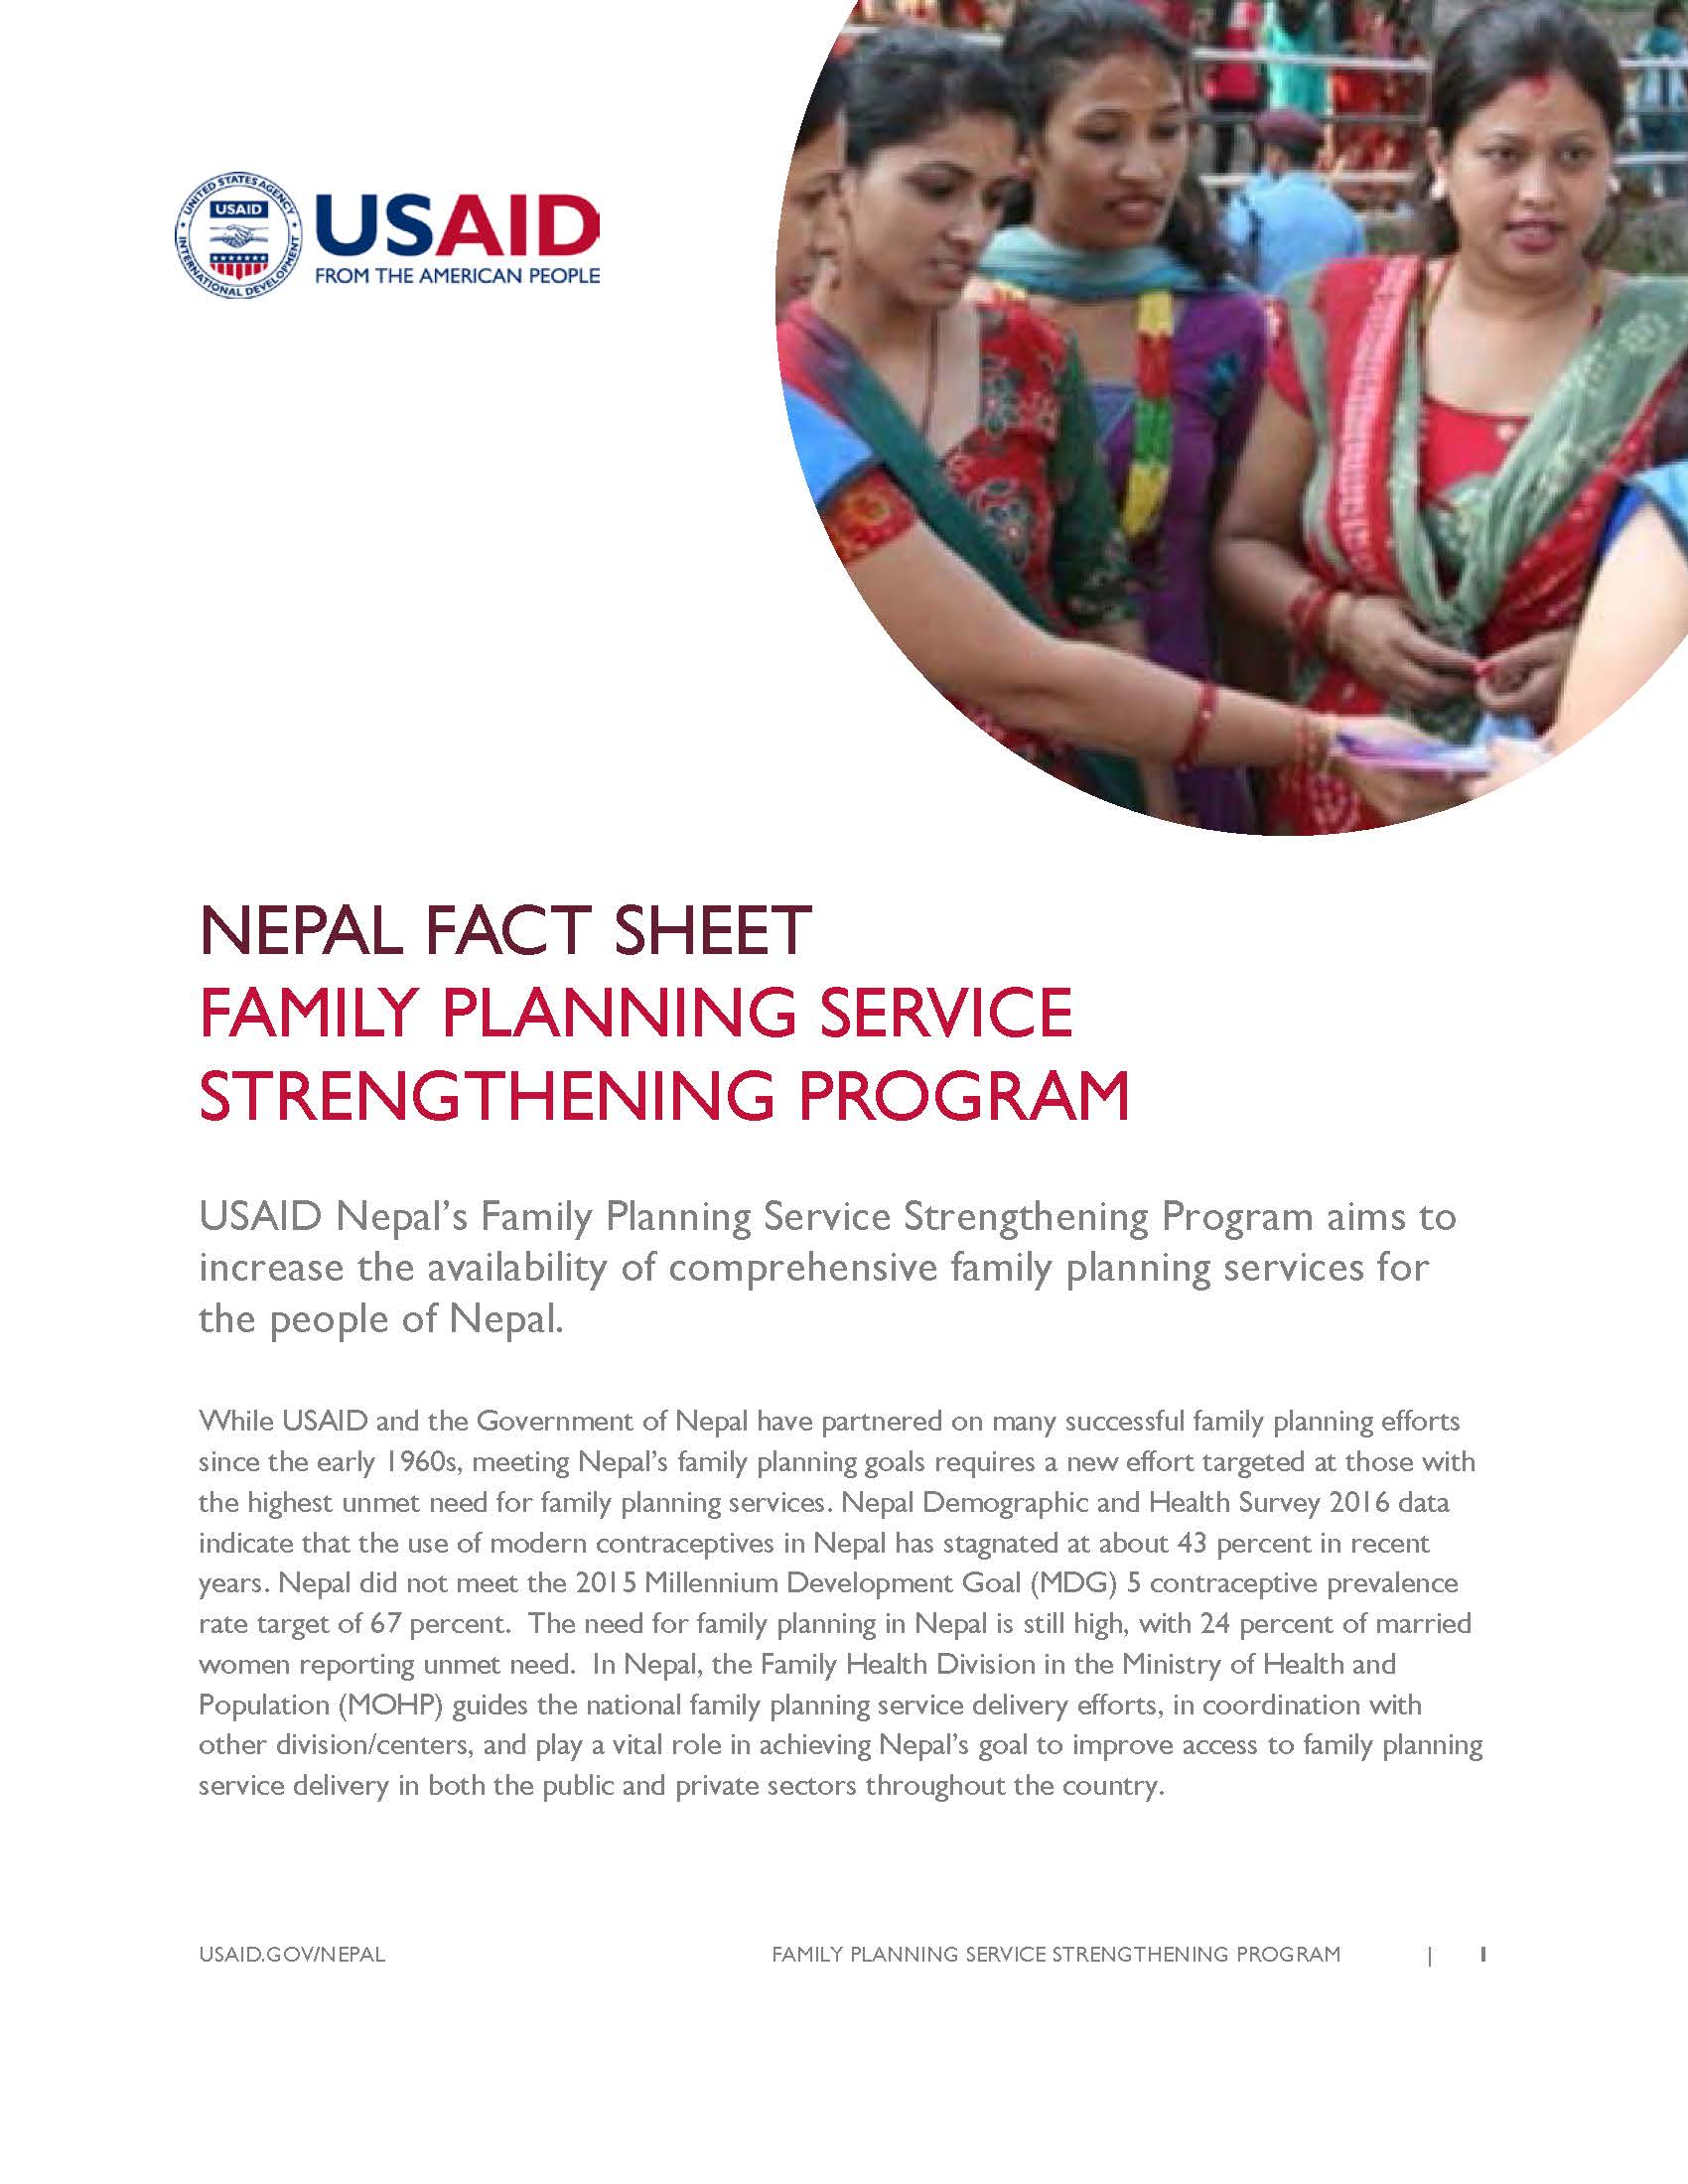 FACTSHEET: FAMILY PLANNING SERVICE STRENGTHENING PROGRAM 